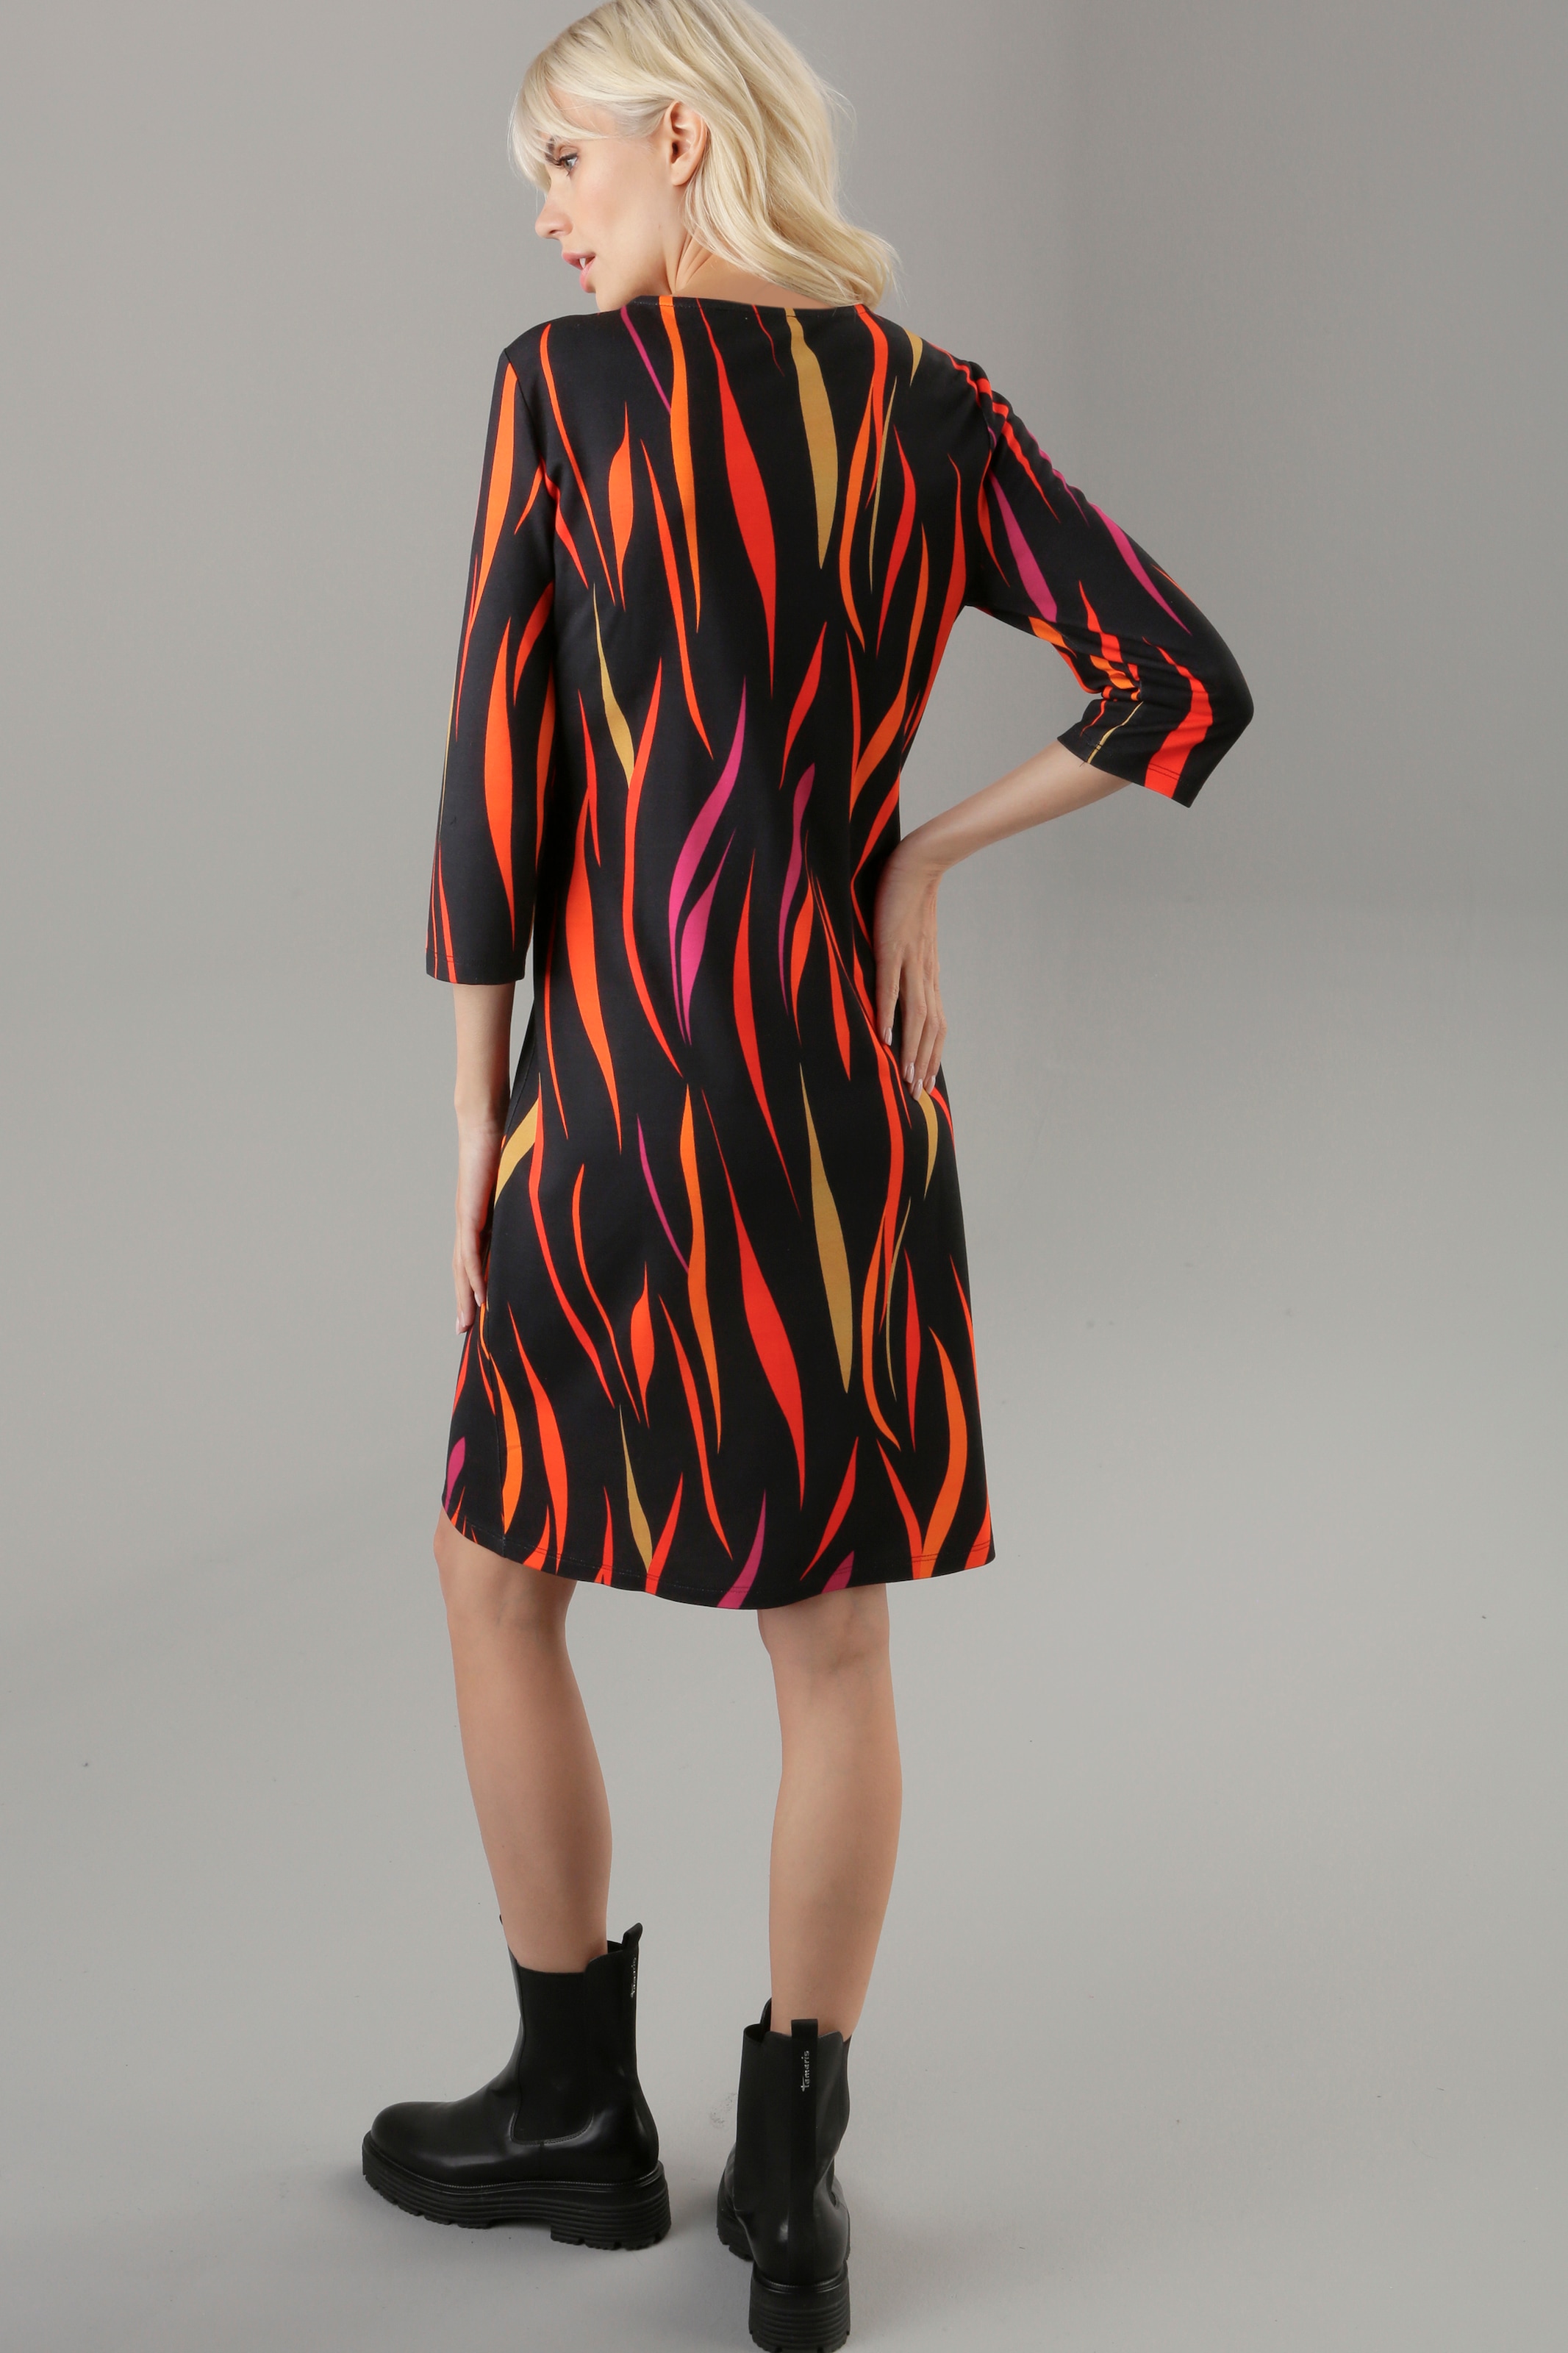 Aniston SELECTED Jerseykleid, mit Allover-Druck in Knallfarben kaufen | I\'m  walking